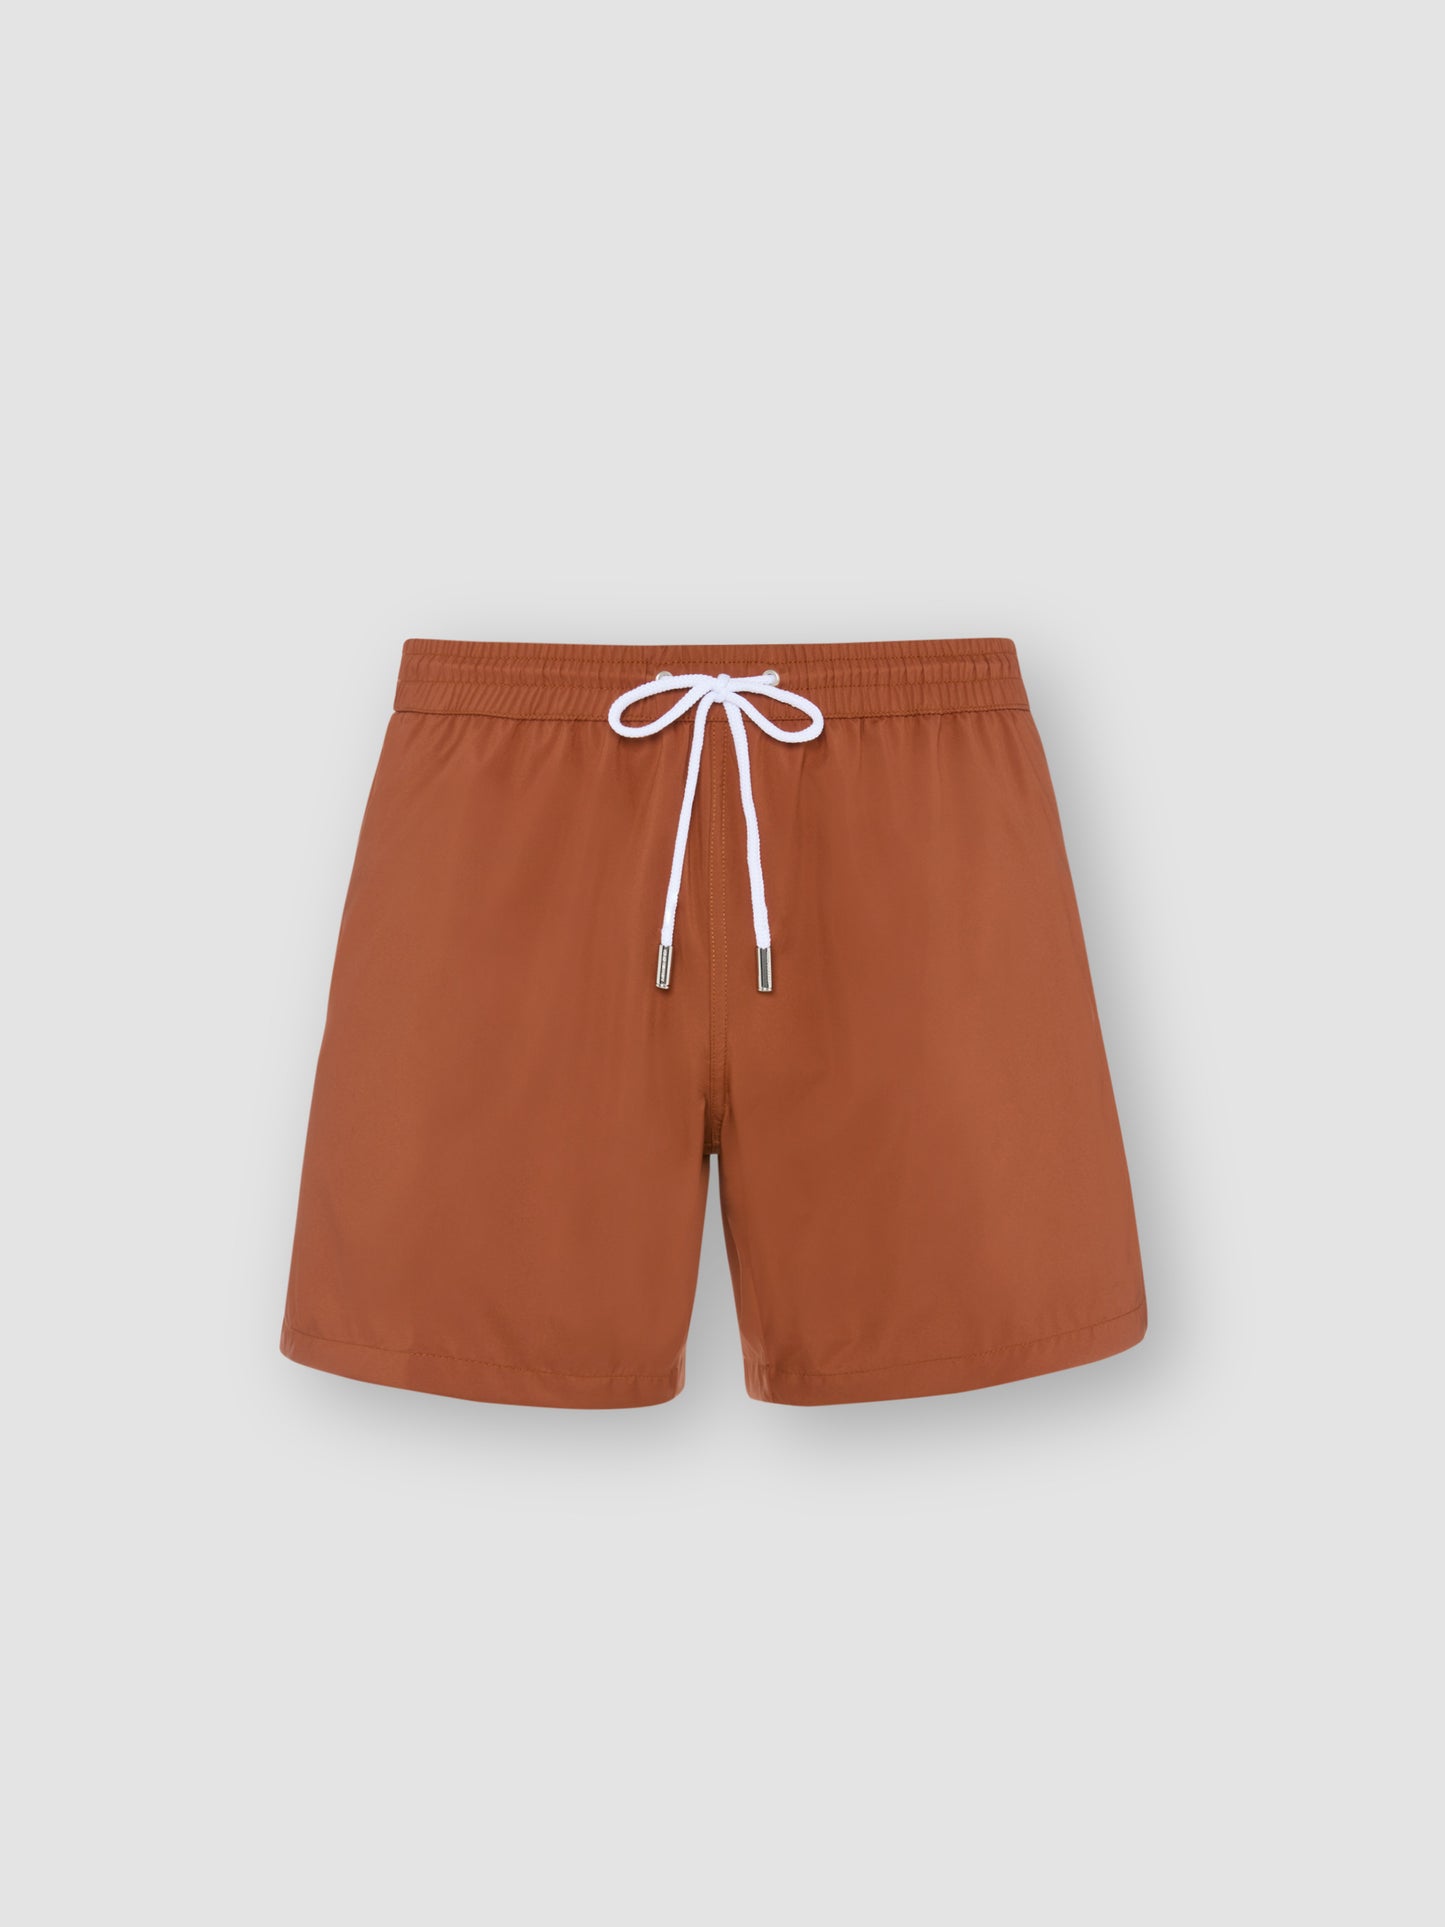 Technical Nylon Mid Length Swim Shorts Rust Product Image